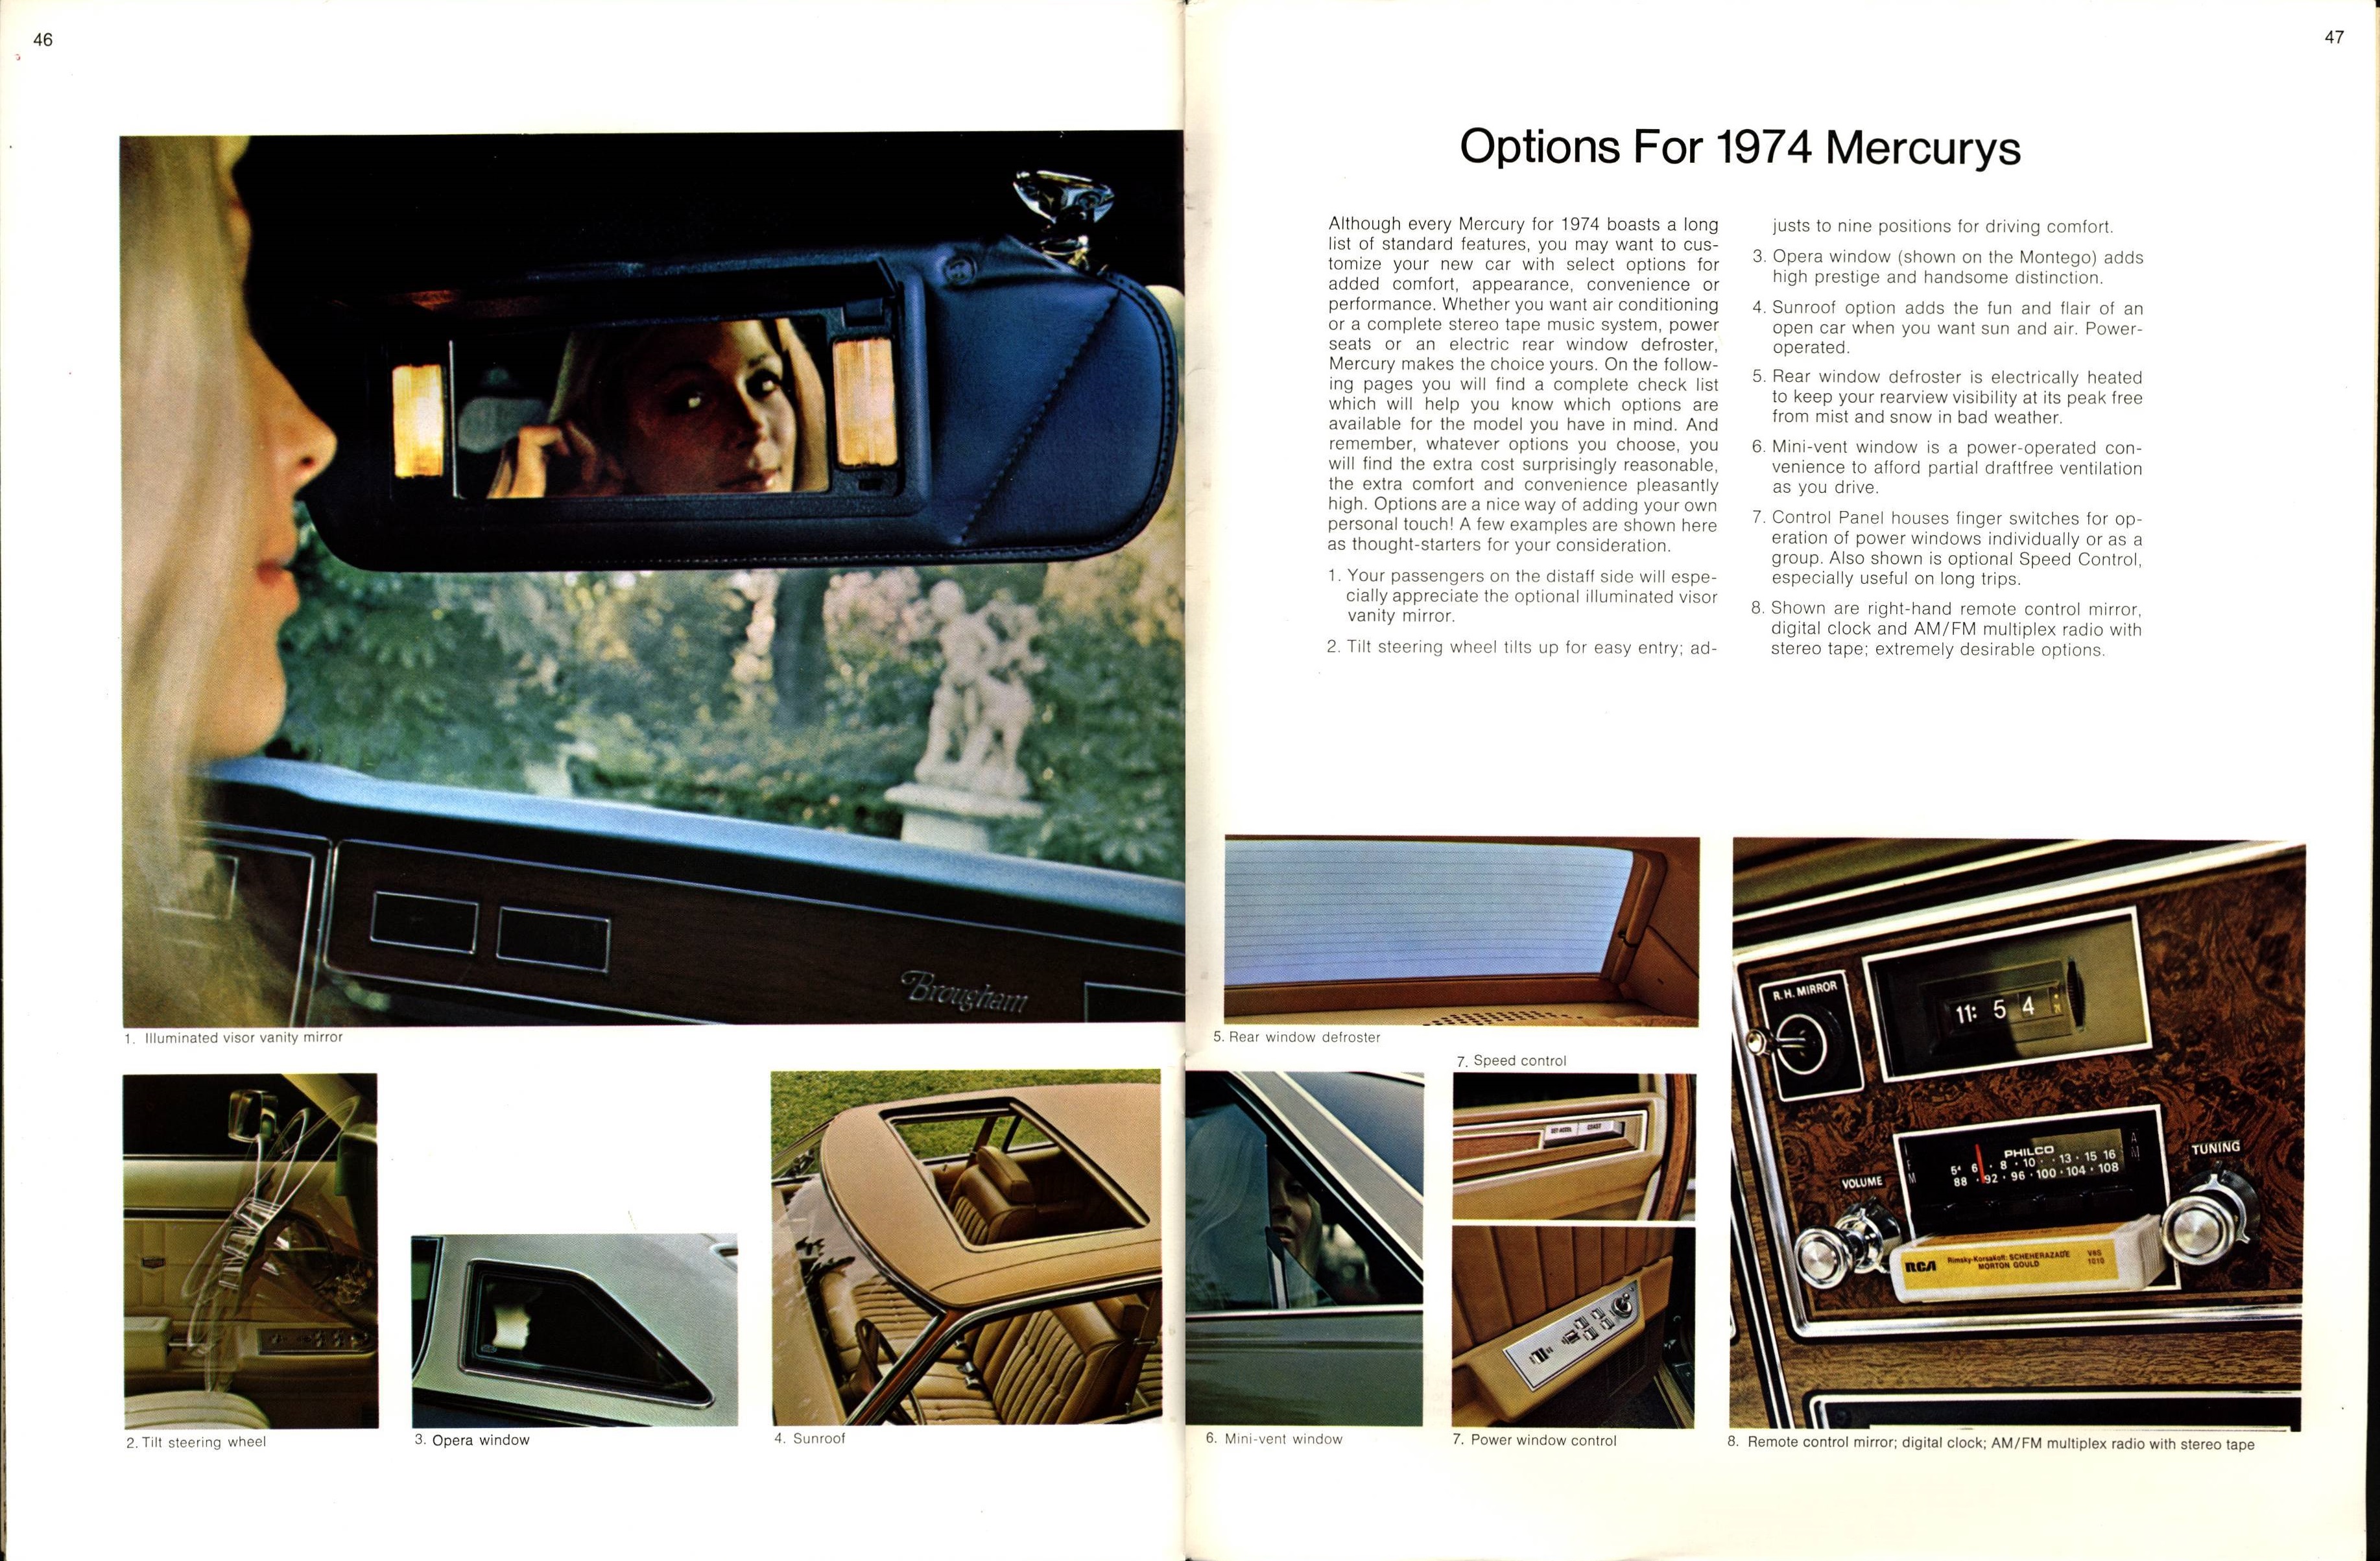 1974 Mercury Full Line Brochure 46-47